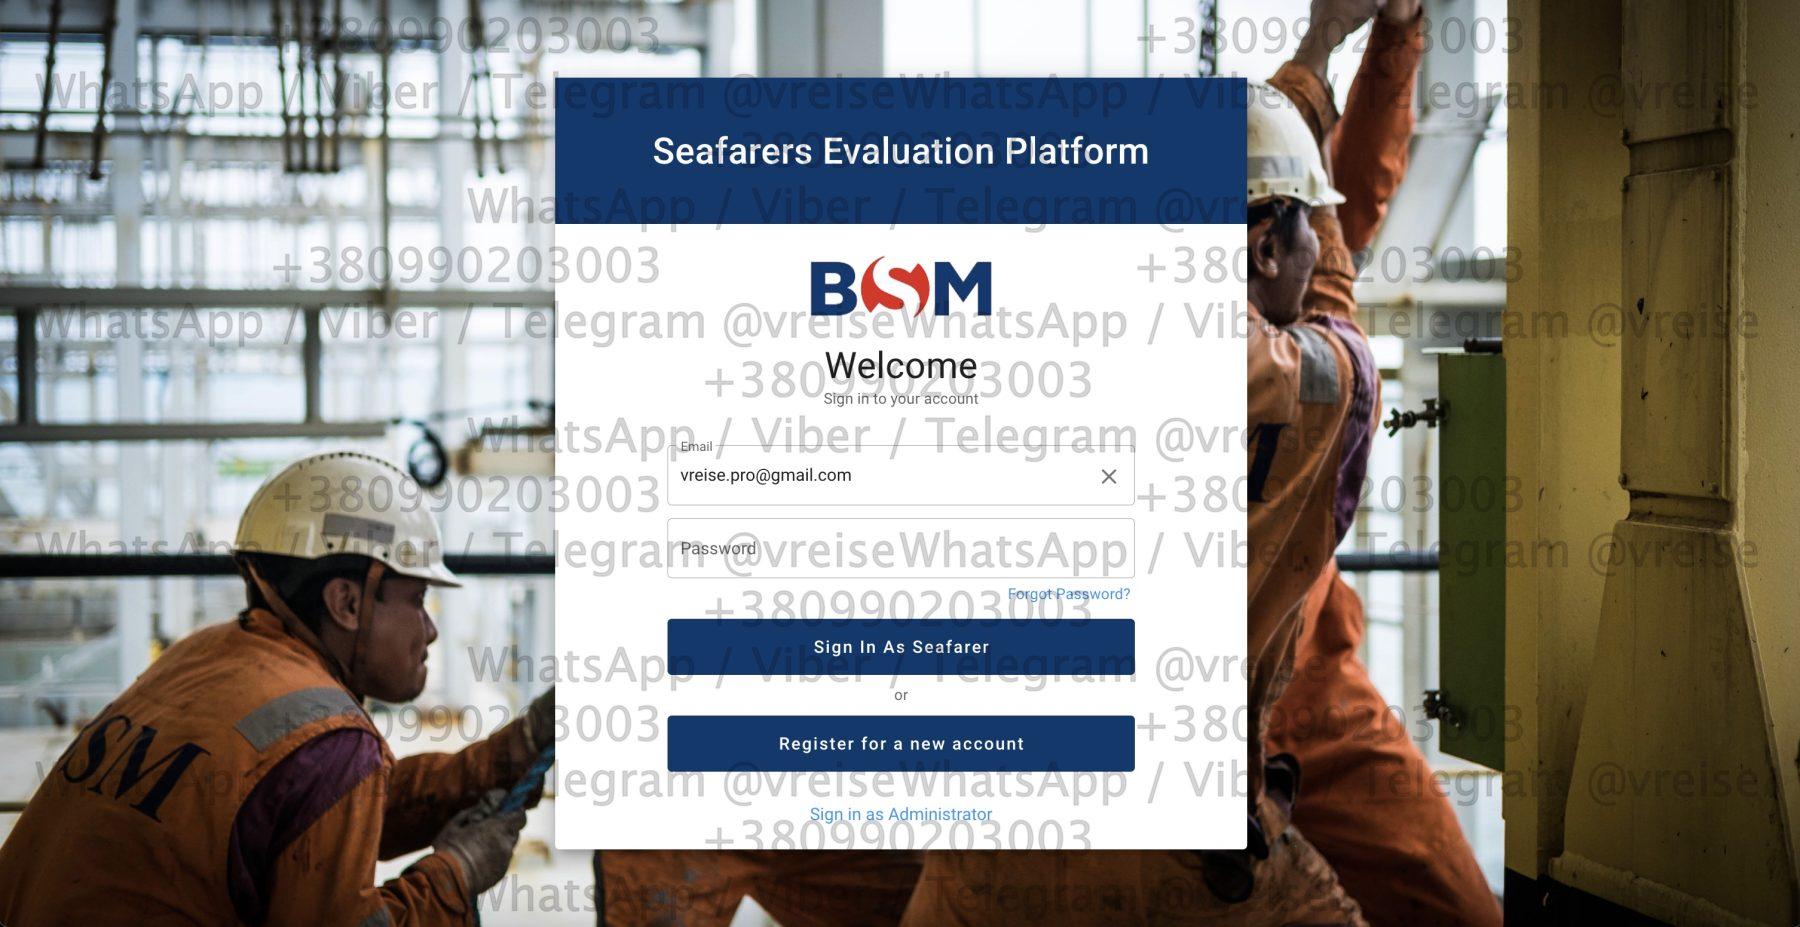  BSM GAS Tanker Operational Engine - Trainee Engineer, SEP - Seafarers Evaluation Platform, TalentLMS answers, ответы